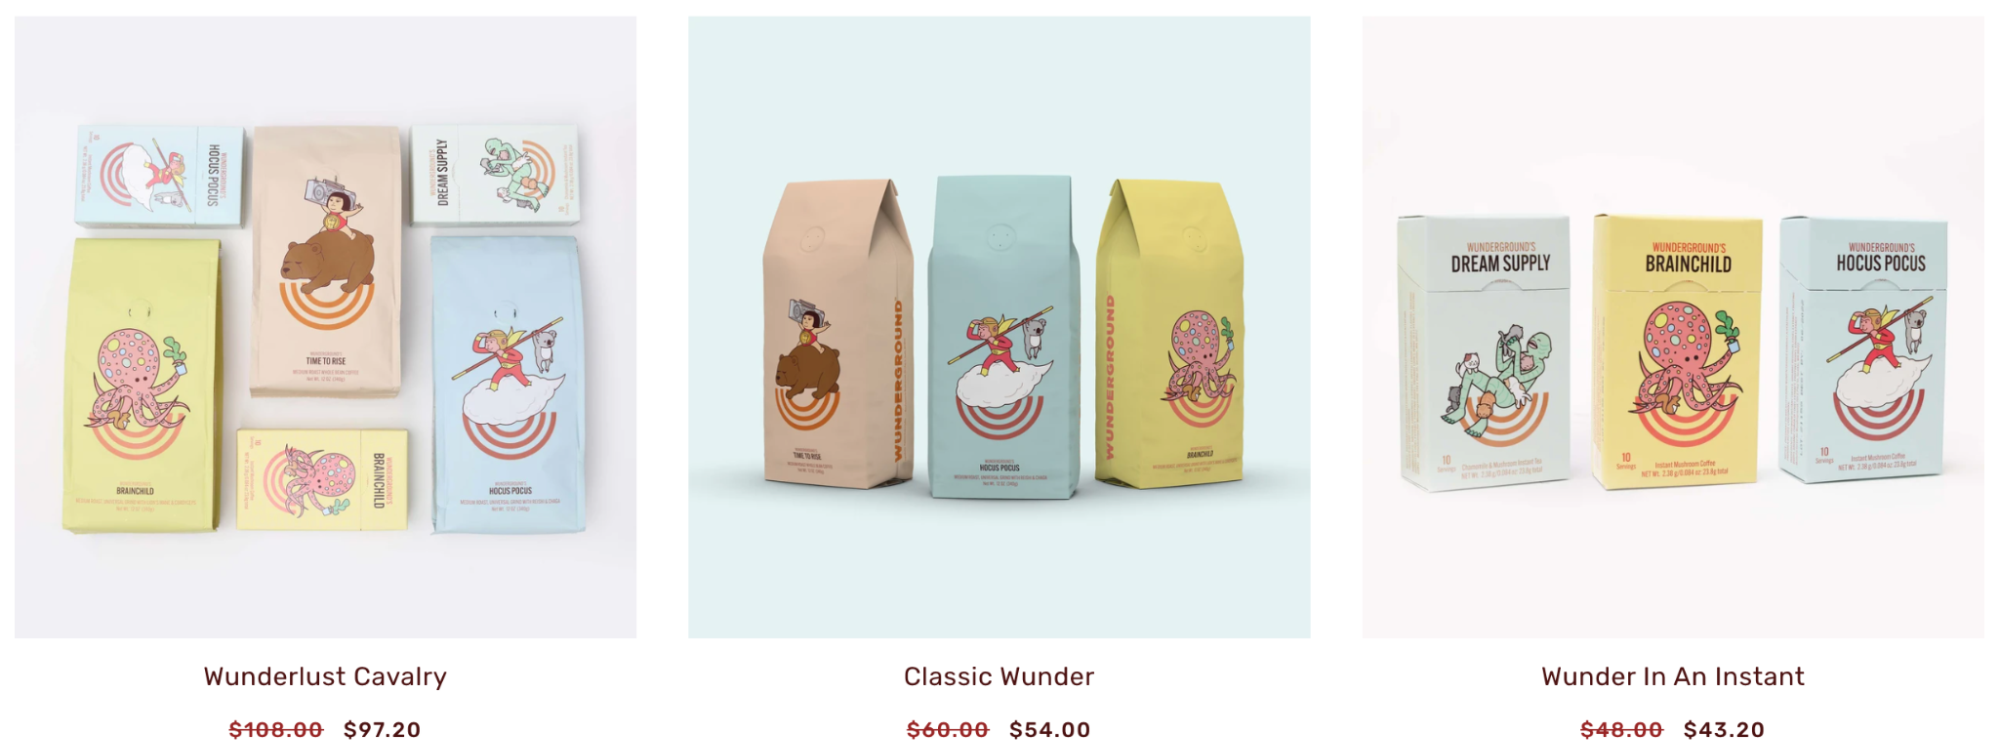 Wunderground Coffee 网站上的产品页面示例。